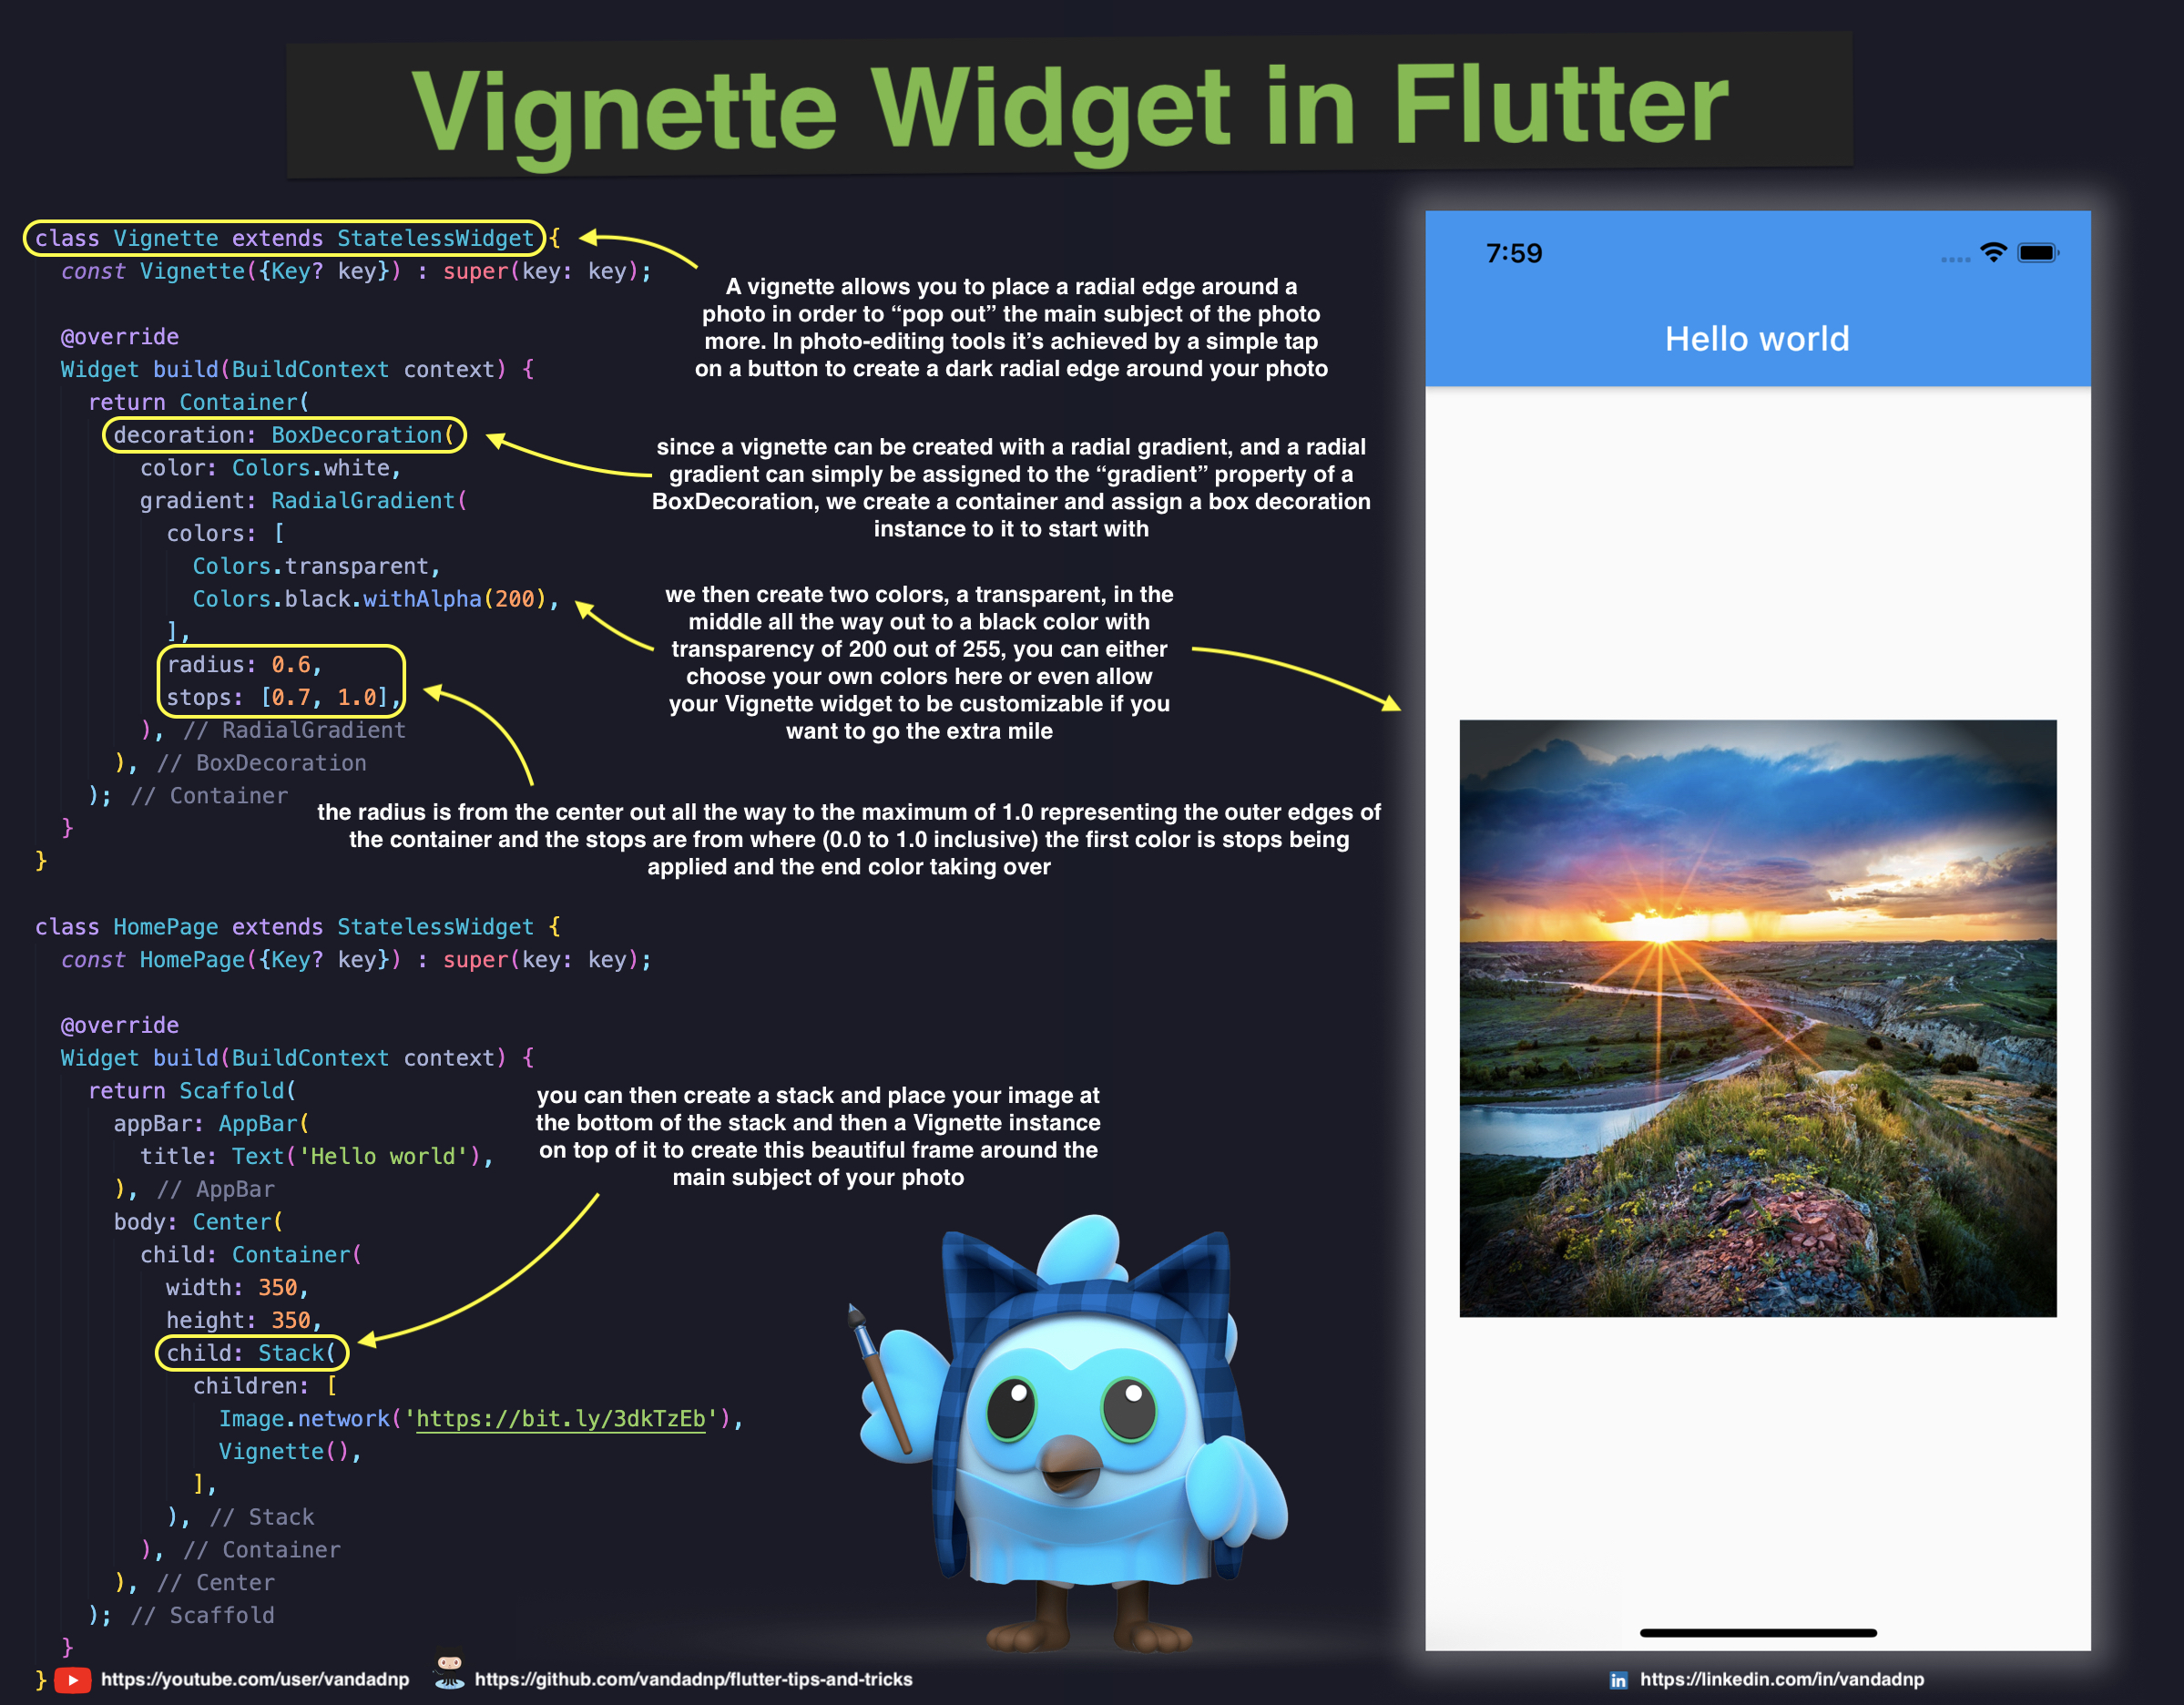 vignette-widget-in-flutter.jpg